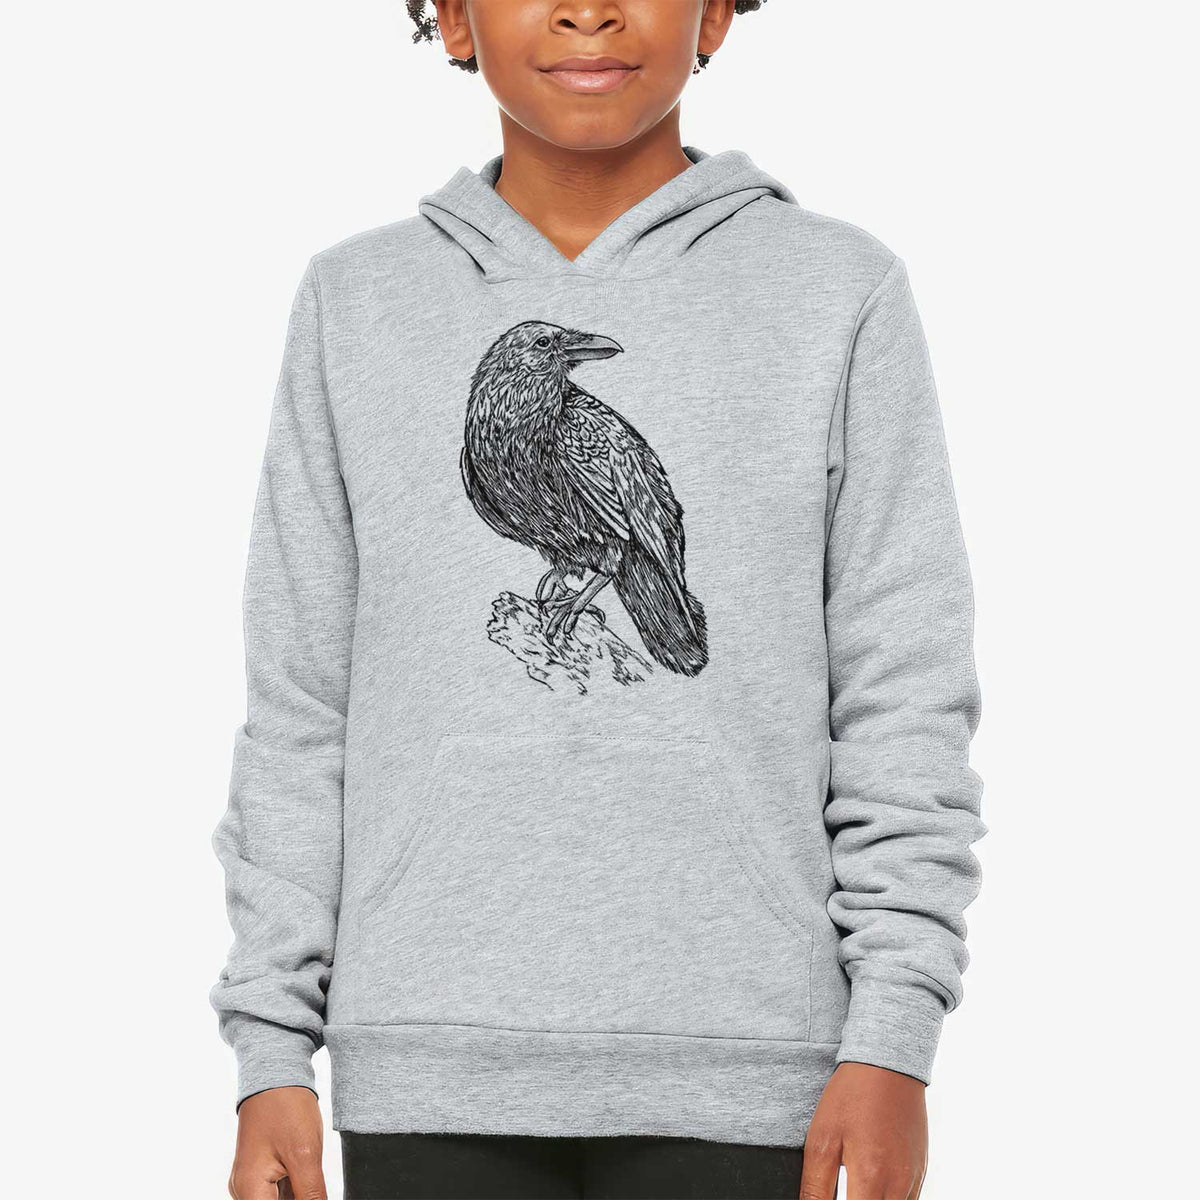 Corvus corax - Common Raven - Youth Hoodie Sweatshirt